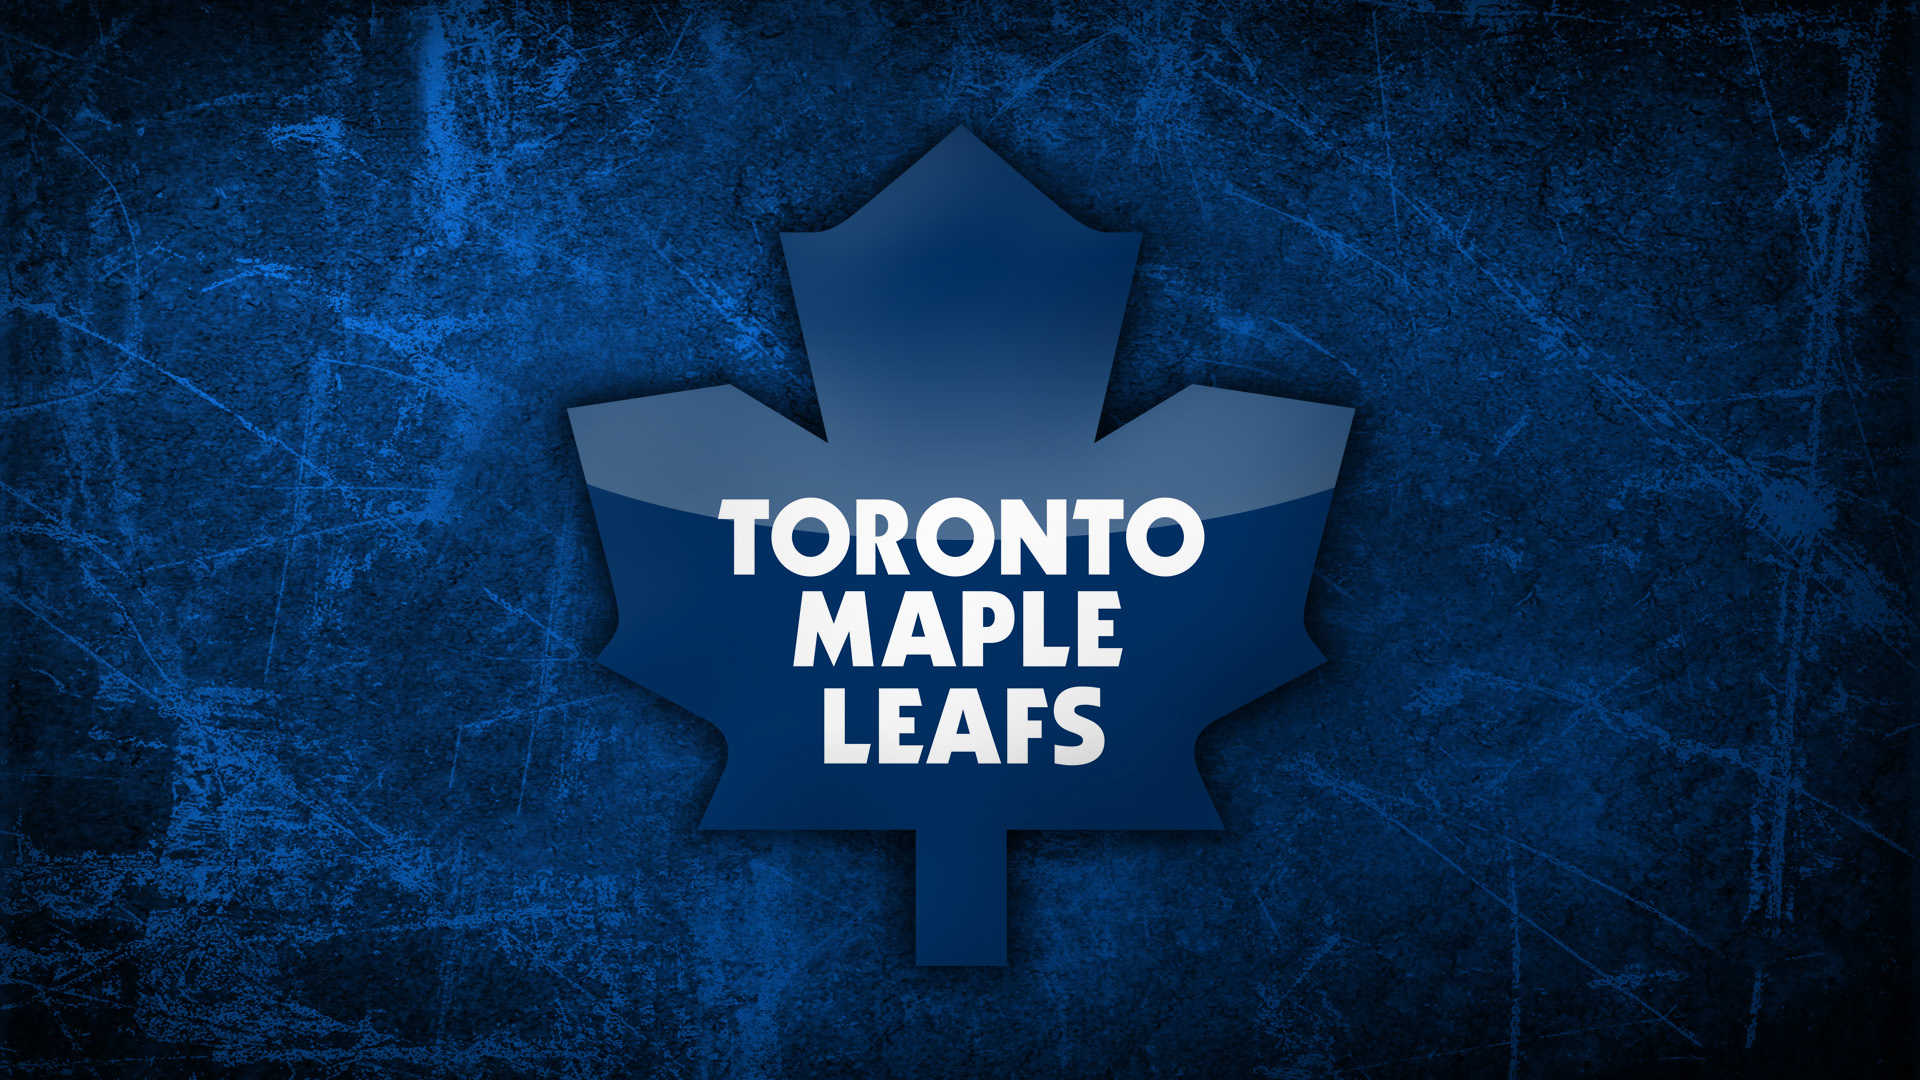 Wallpaper Of Nhl Toronto (торонто) Maple Leafs Background - Cool Toronto Maple Leafs - HD Wallpaper 